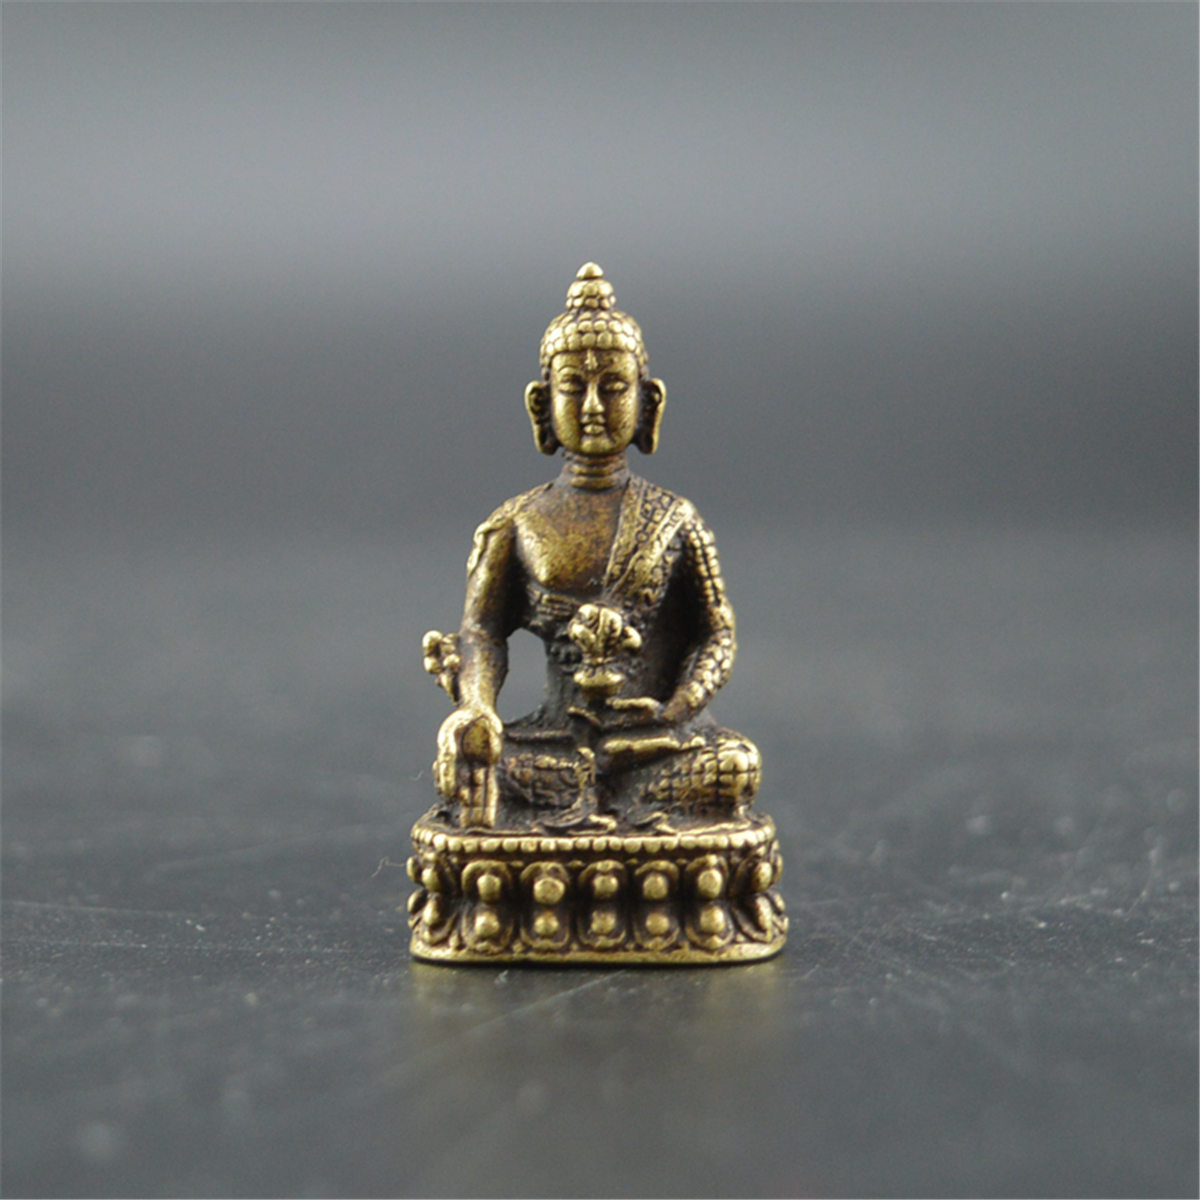 

Статуя статуи Будды с античным стилем Медь Винтаж Буддизм Бог Шакьямуни Статуэтка Будды Бусины